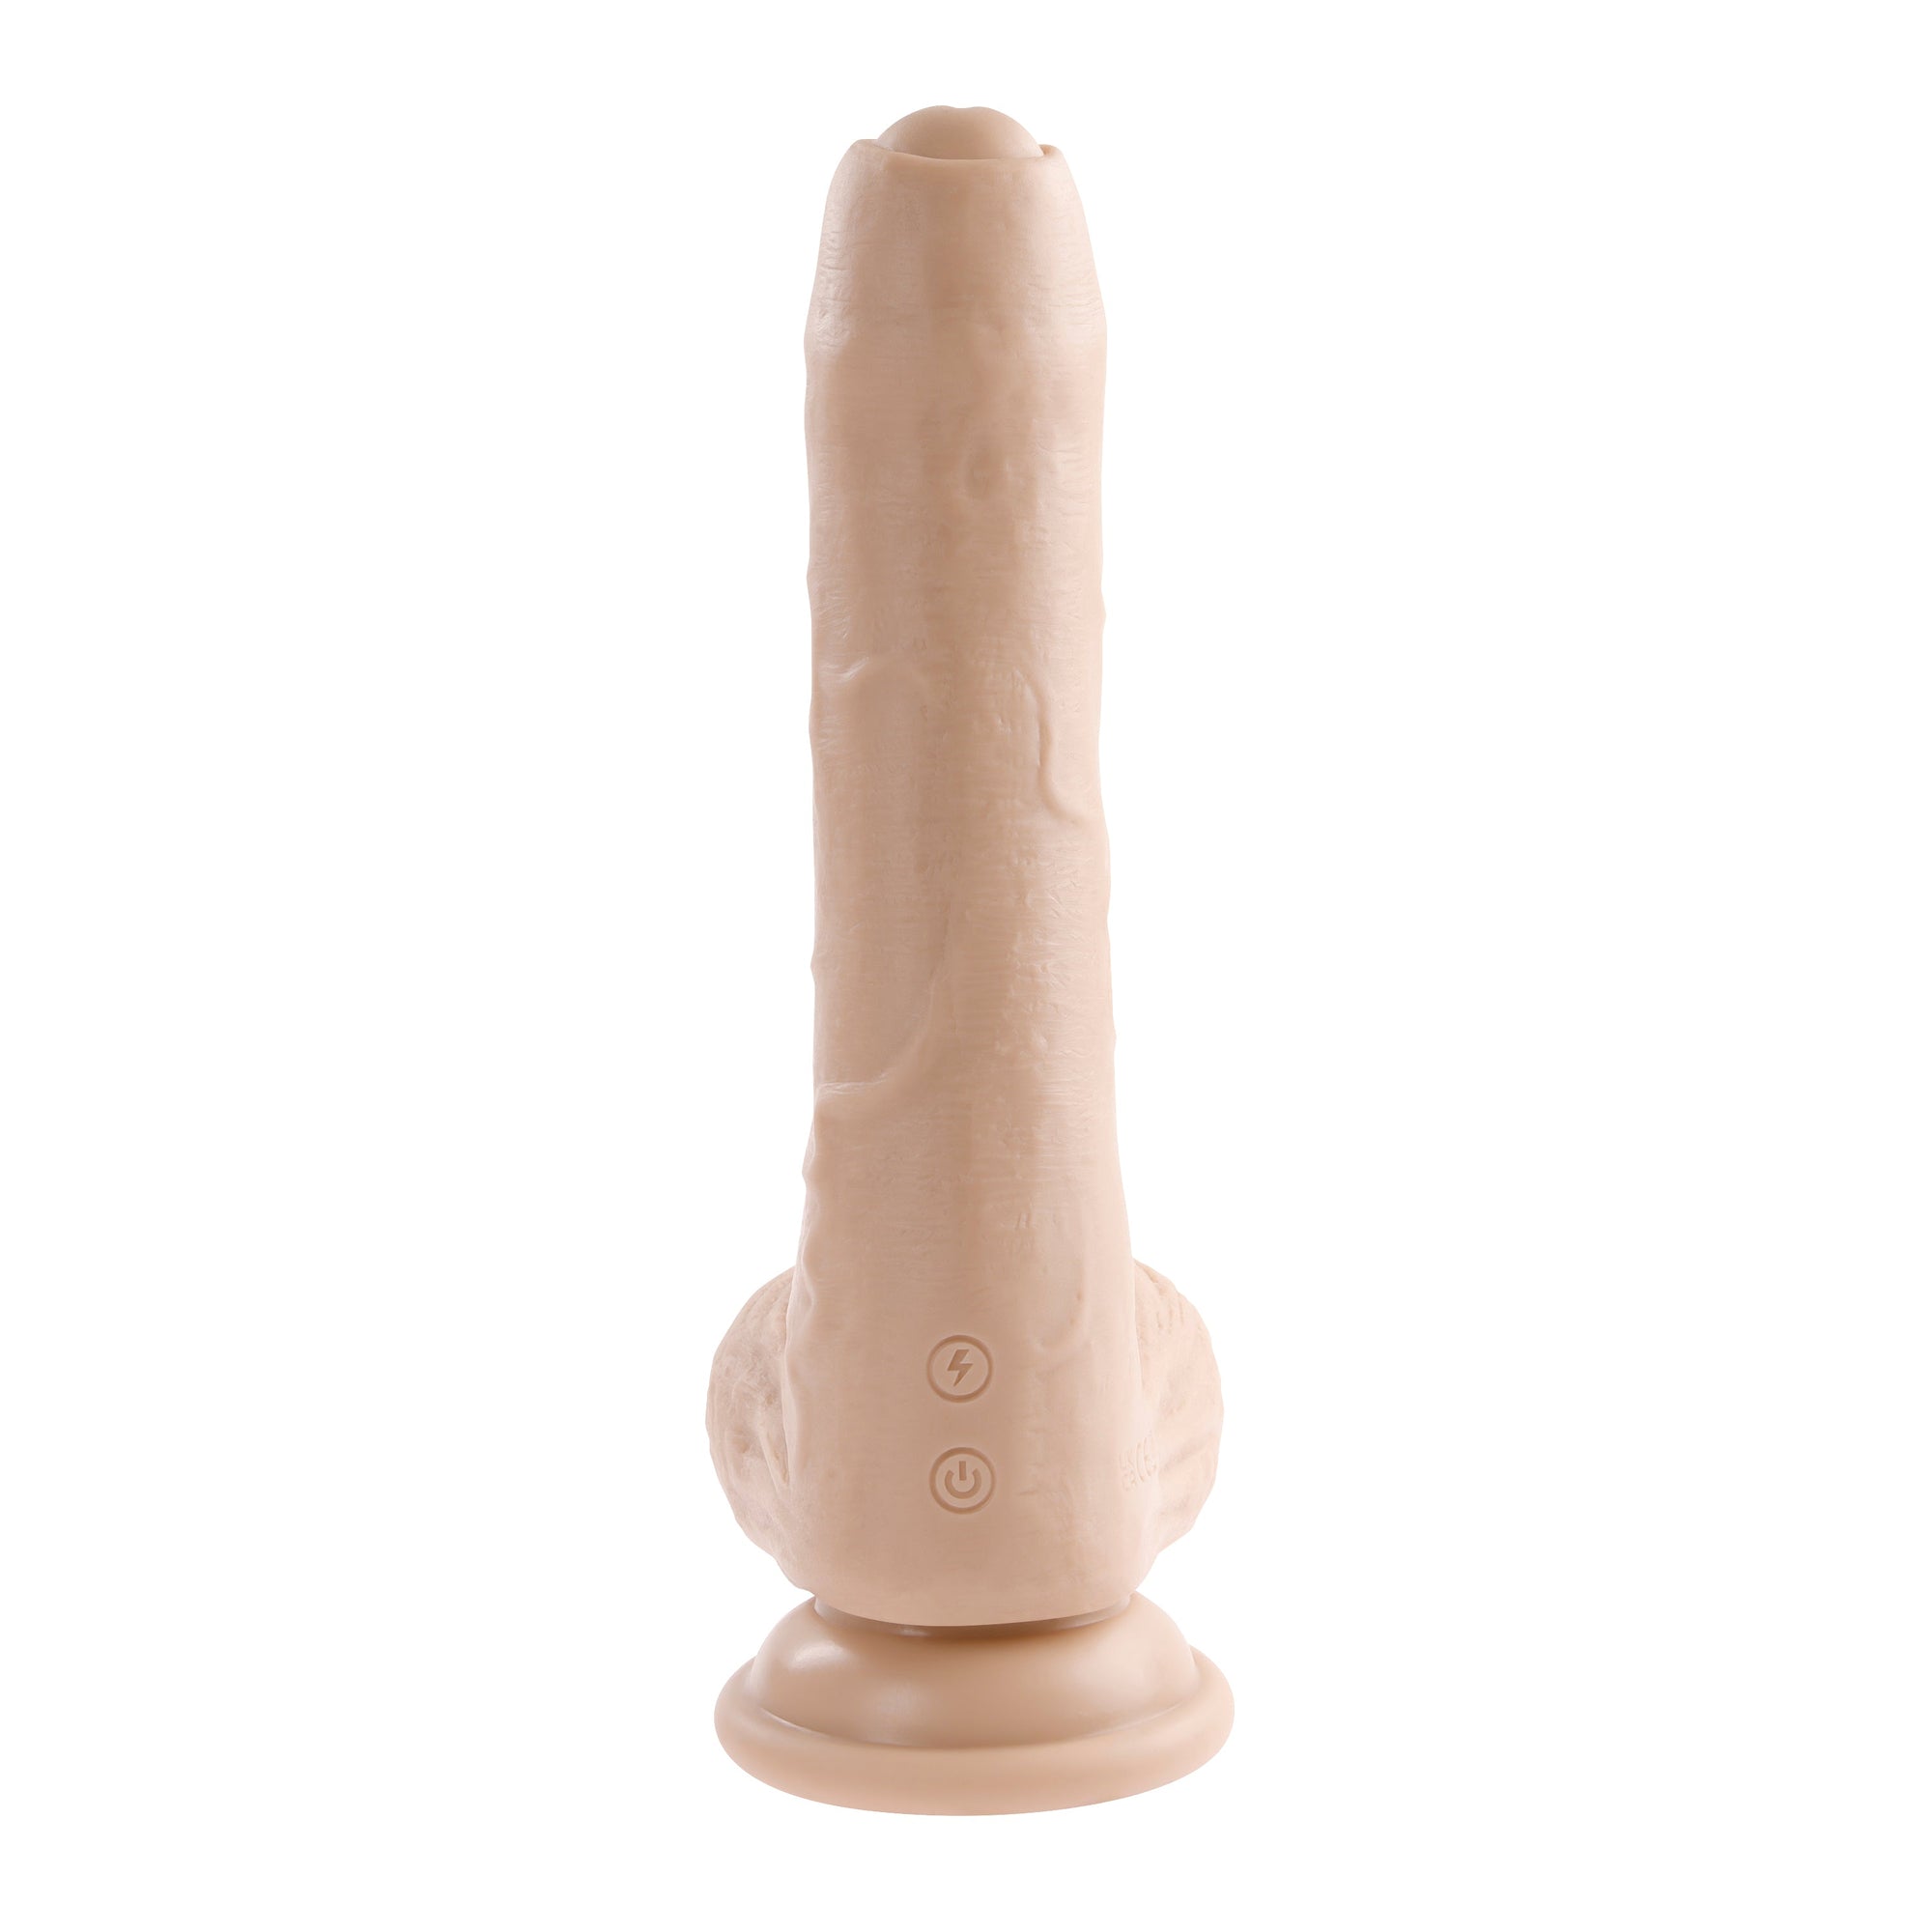 Evolved - Peek A Boo Uncircumcised Realistic Vibrating Dildo 8"